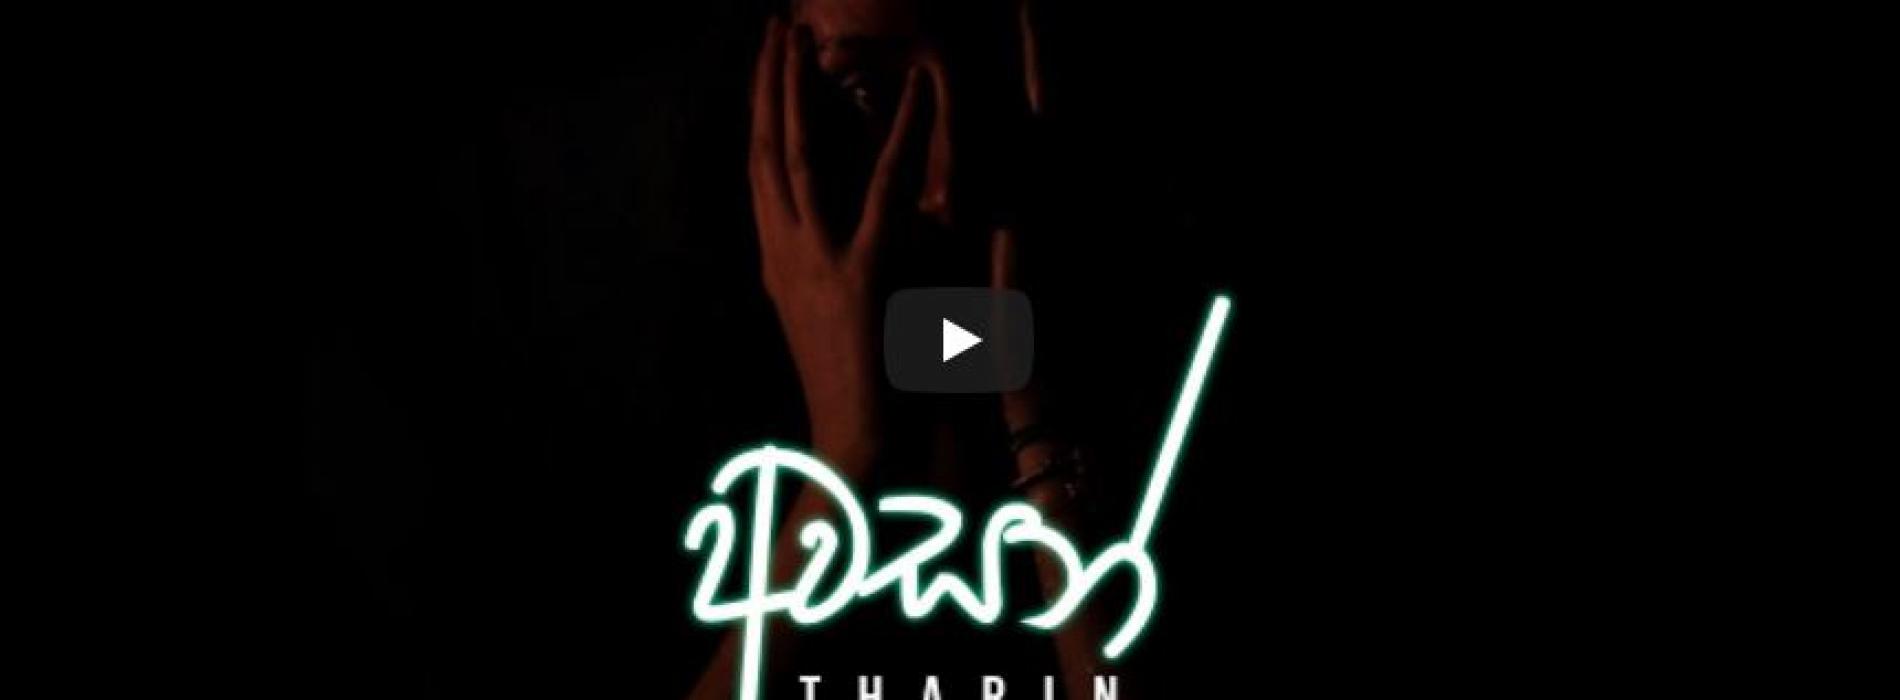 New Music : Awasan “අවසන්” | Tharin (Official Video)